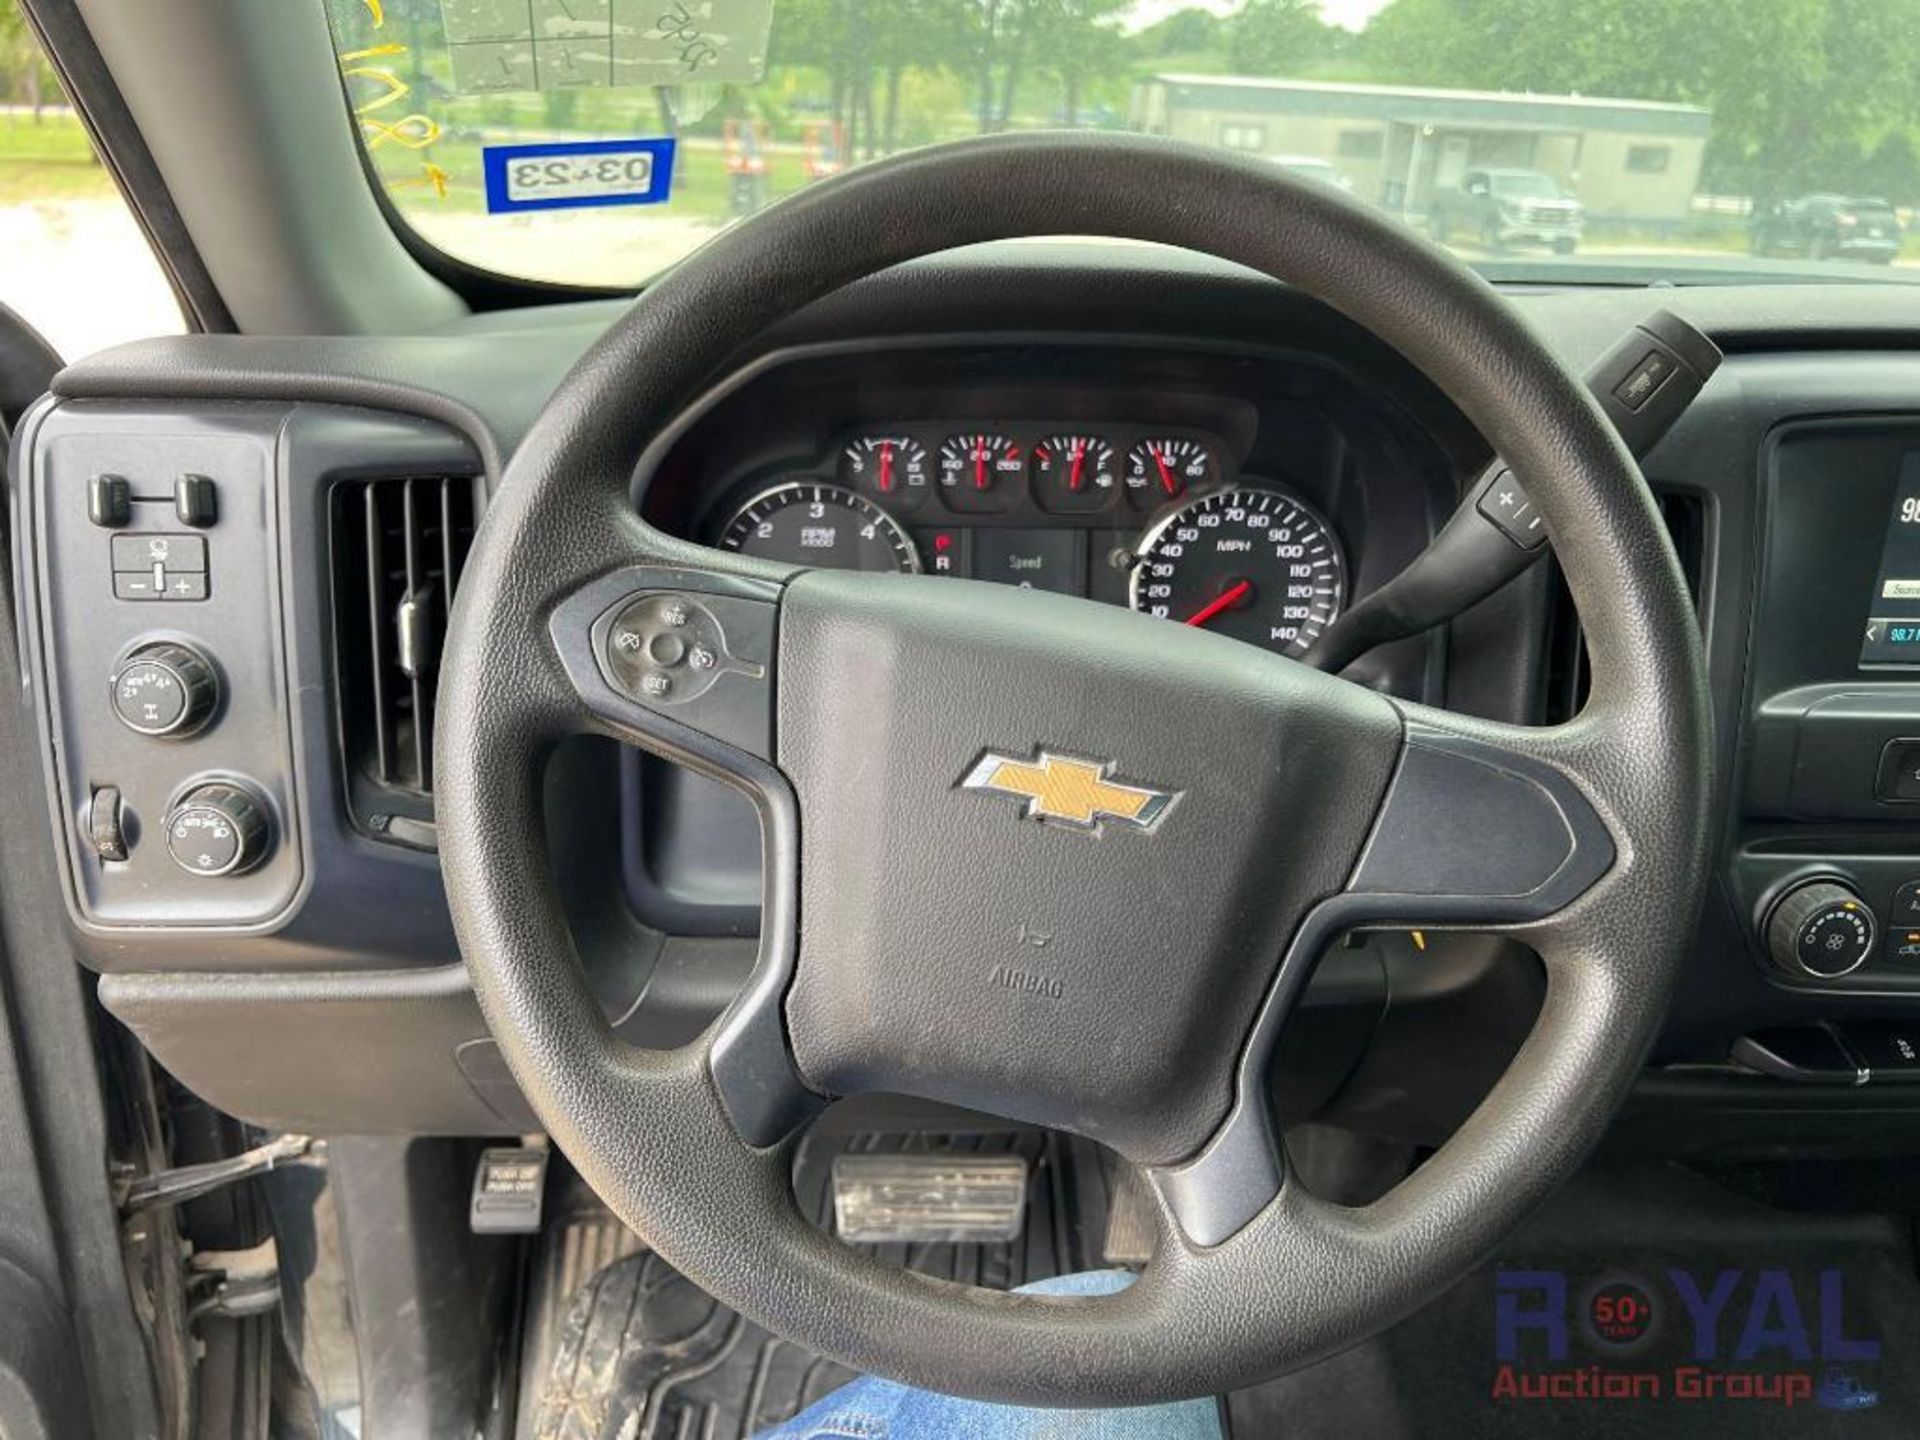 2018 Chevrolet Silverado 4x4 Crew Cab Pickup Truck - Image 21 of 51